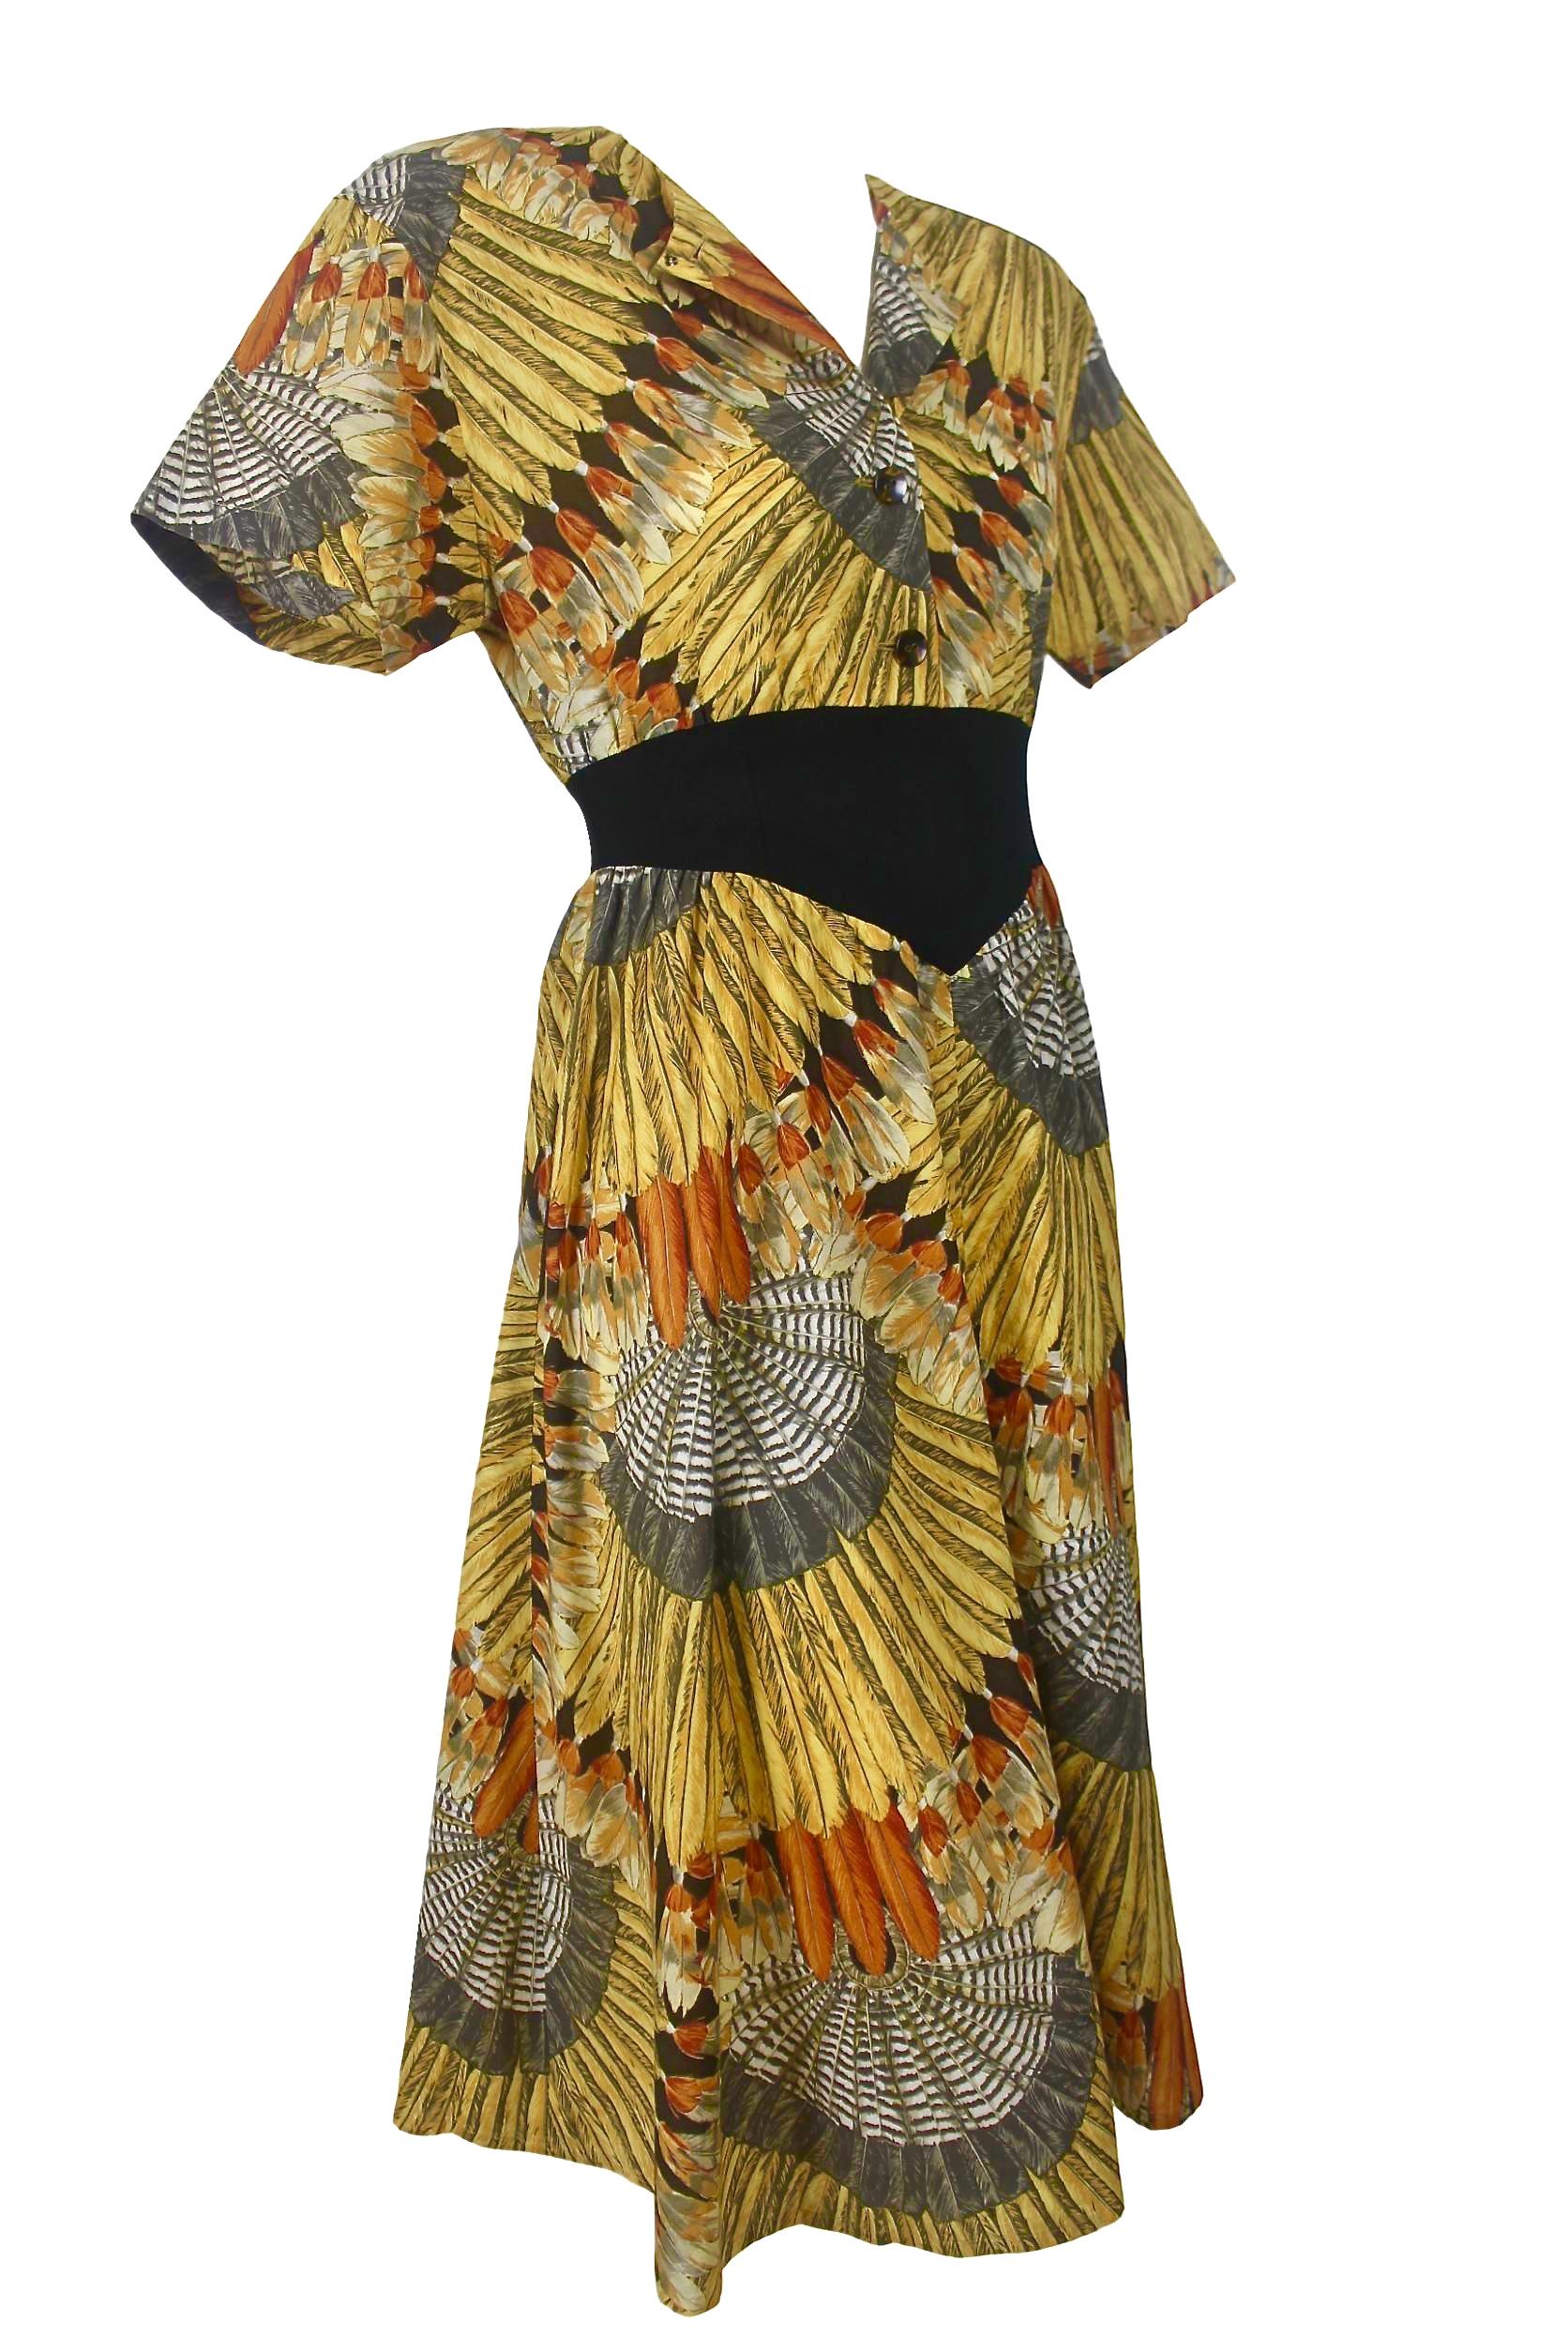 Sorelle Fontana Feather Print Dress For Sale 7